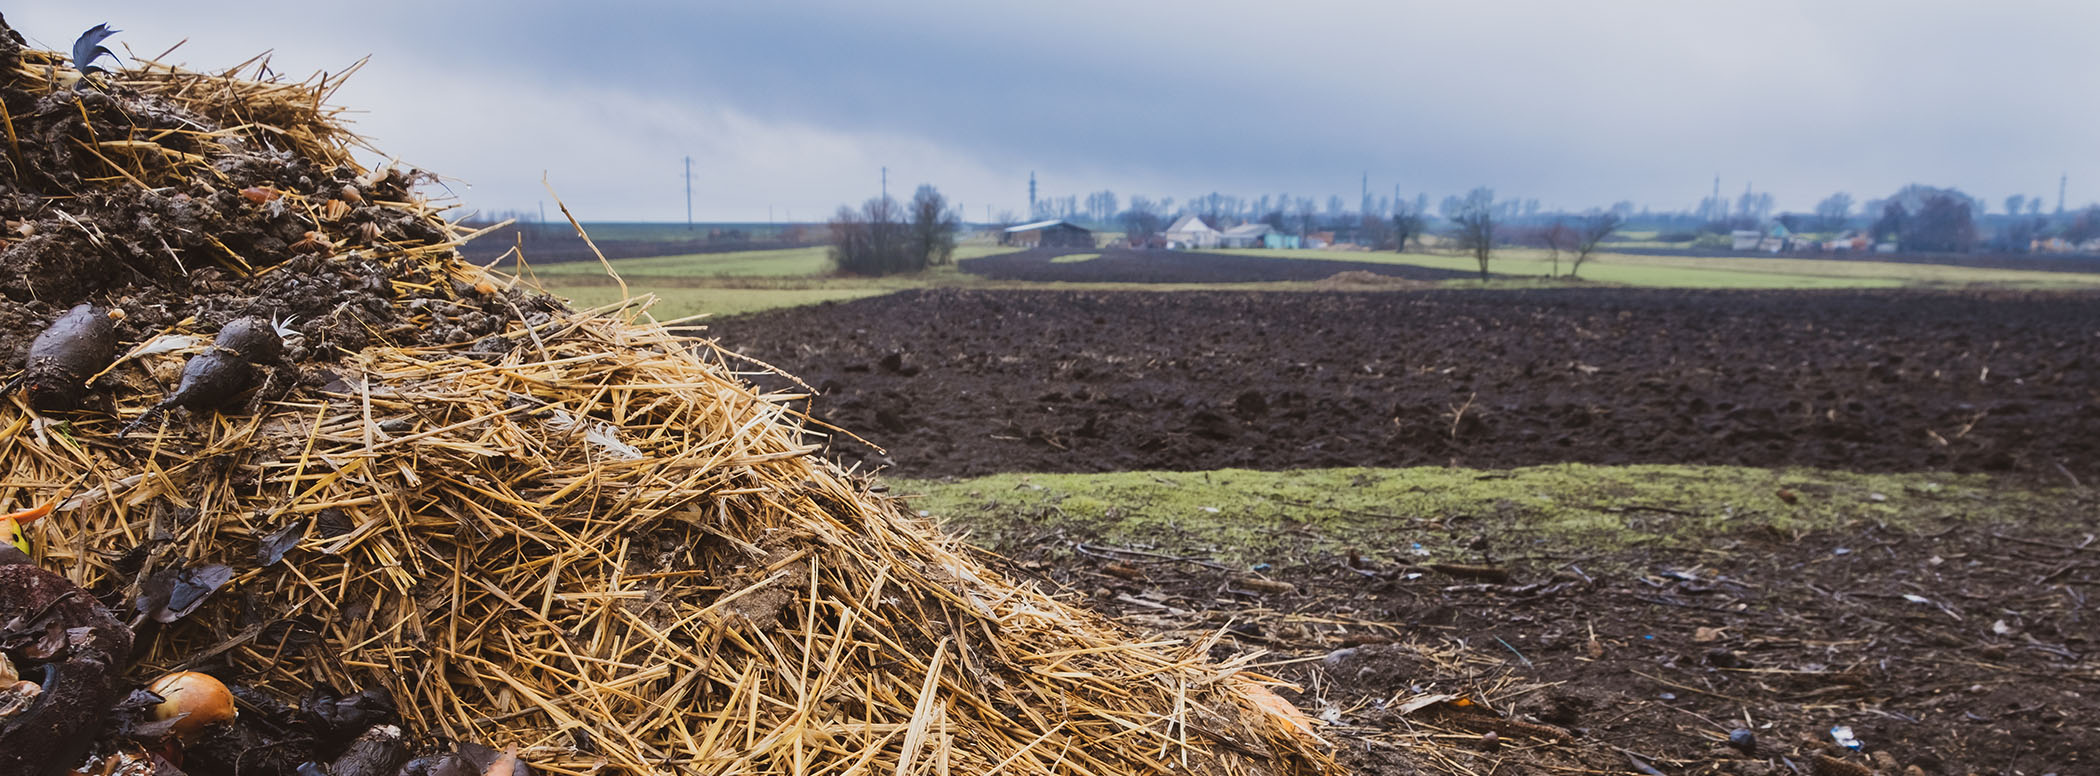 Compost pile near a tilled field under a cloudy sky